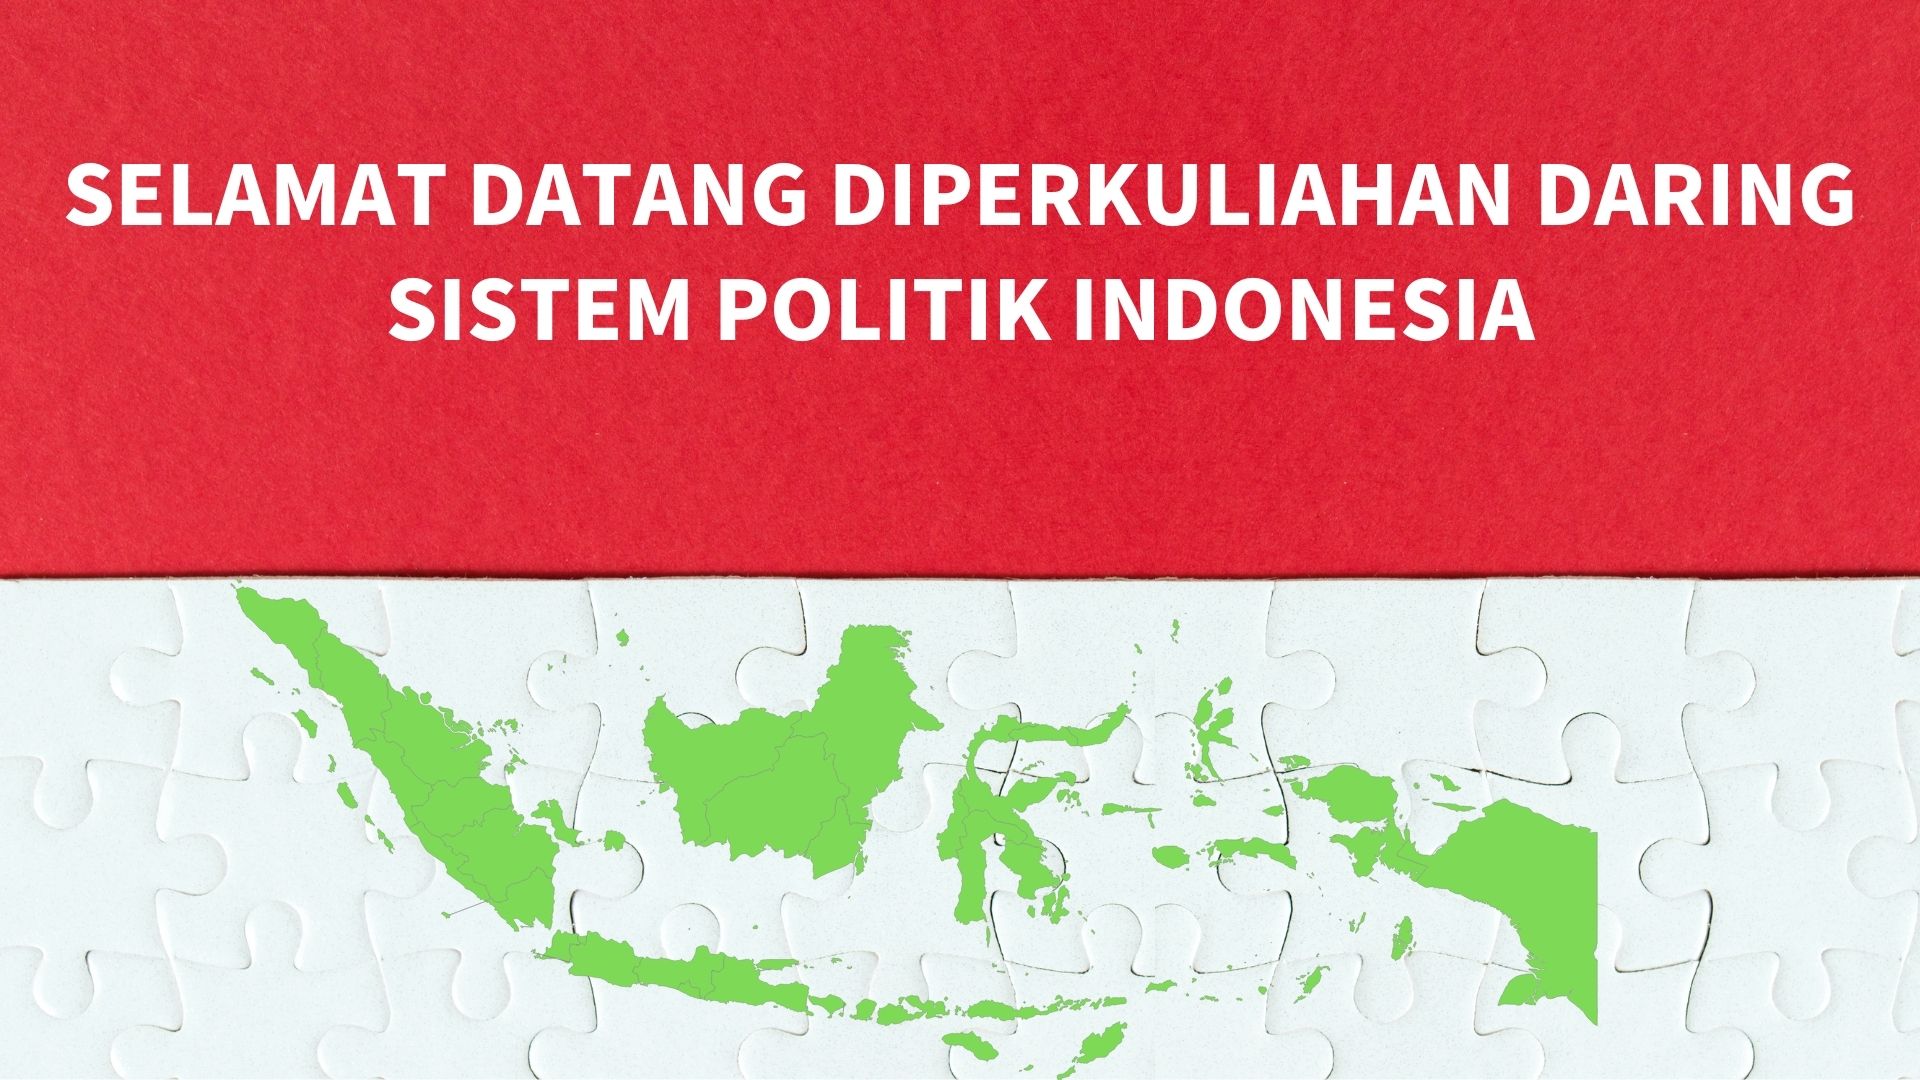 SISTEM POLITIK INDONESIA